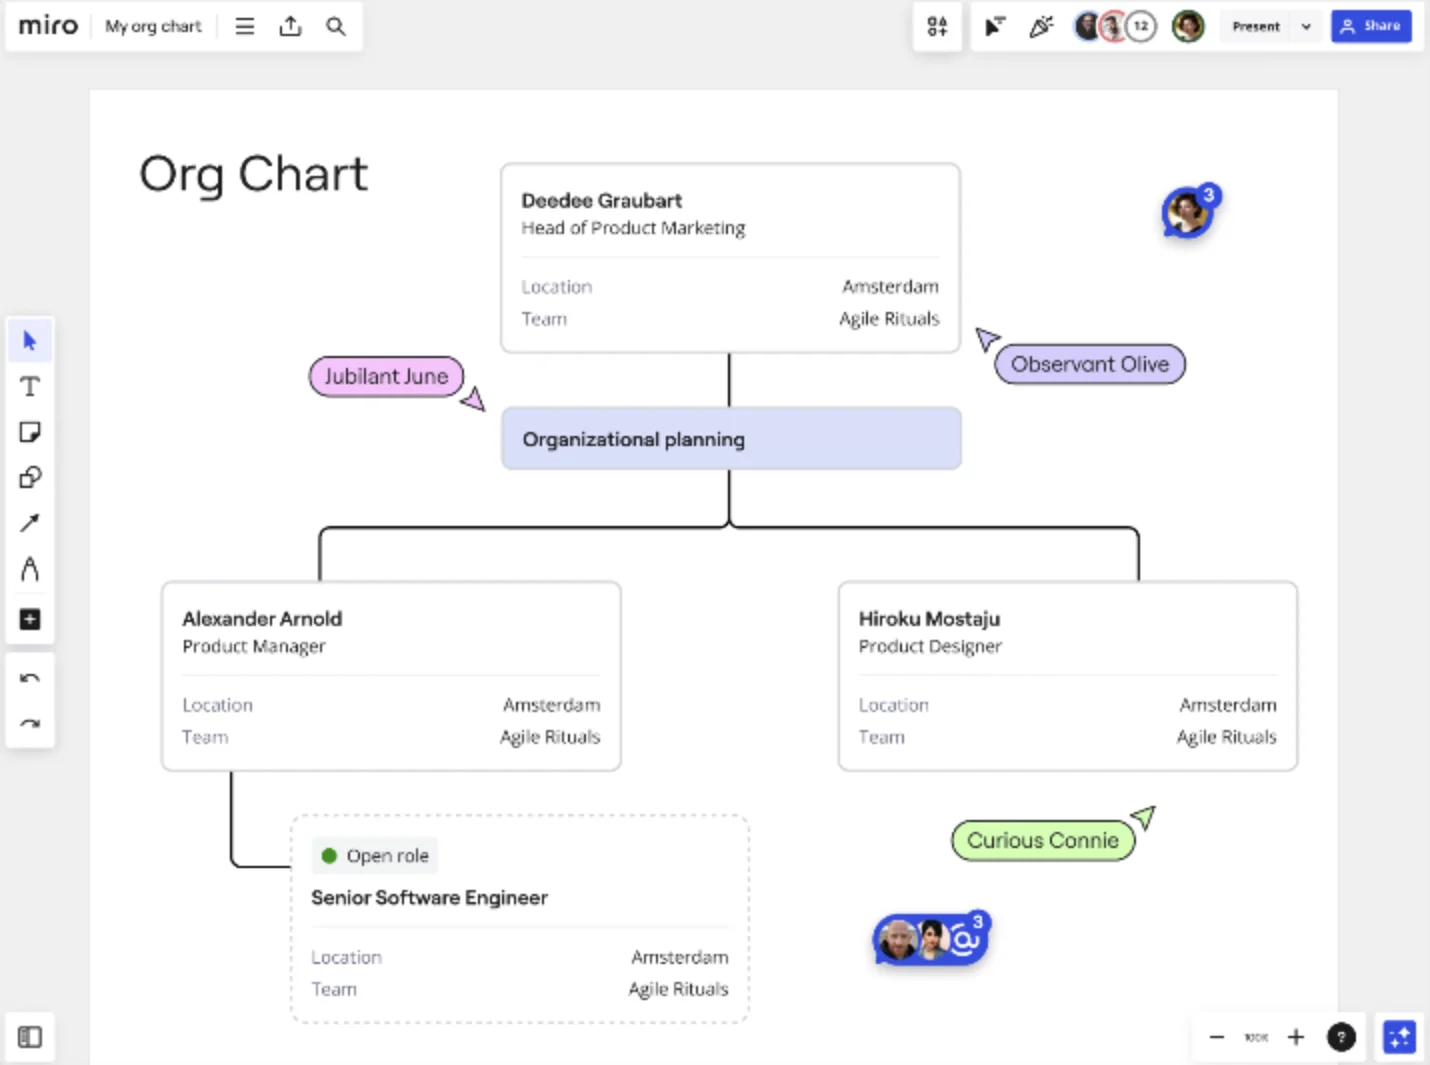 Image of Miro's organizational chart widget